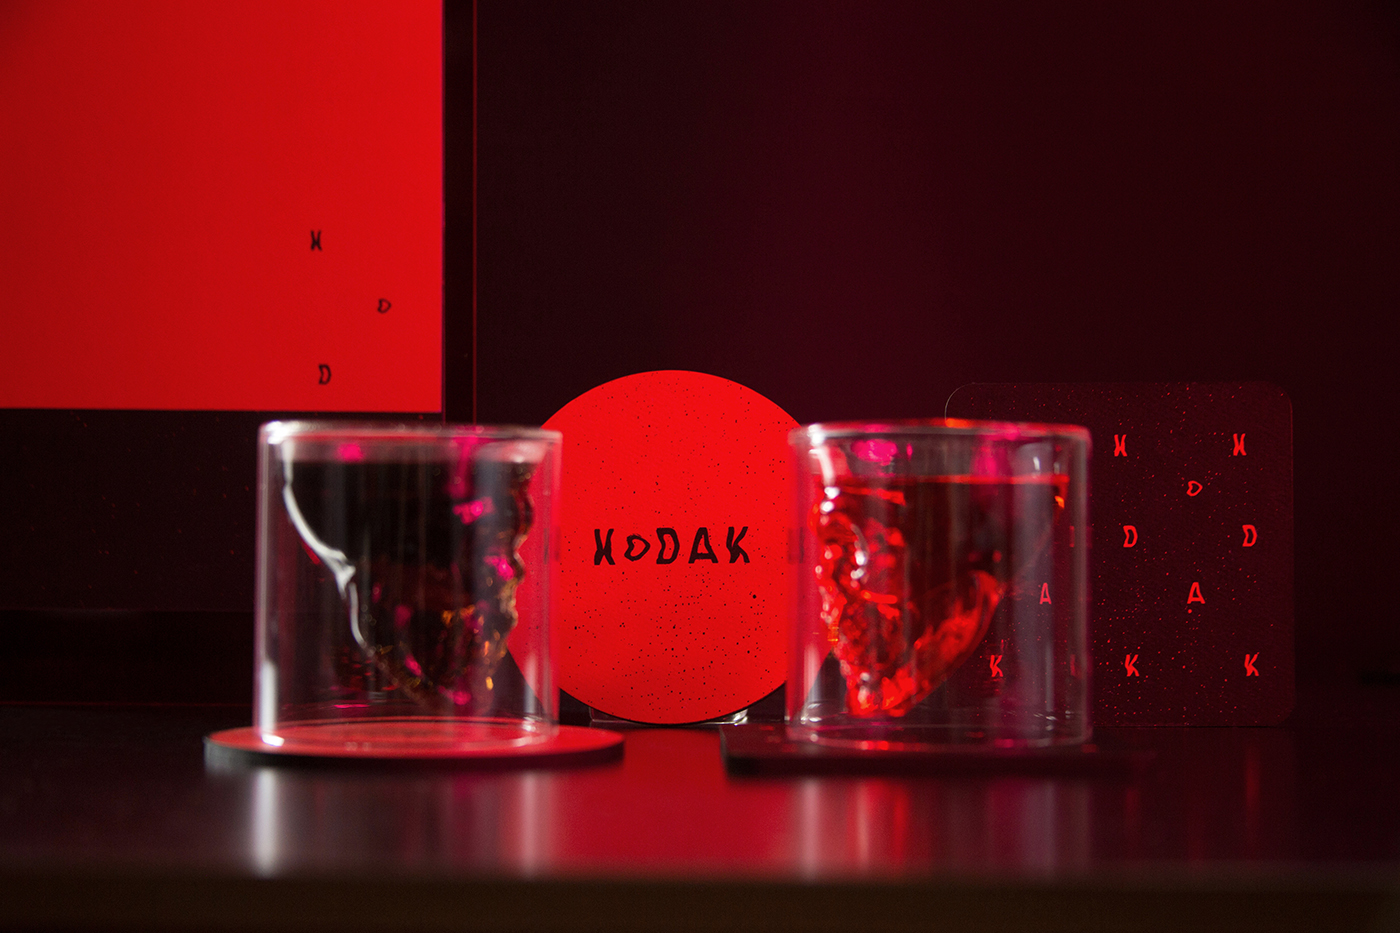 Visual Identity and Graphic Design for Kodak 